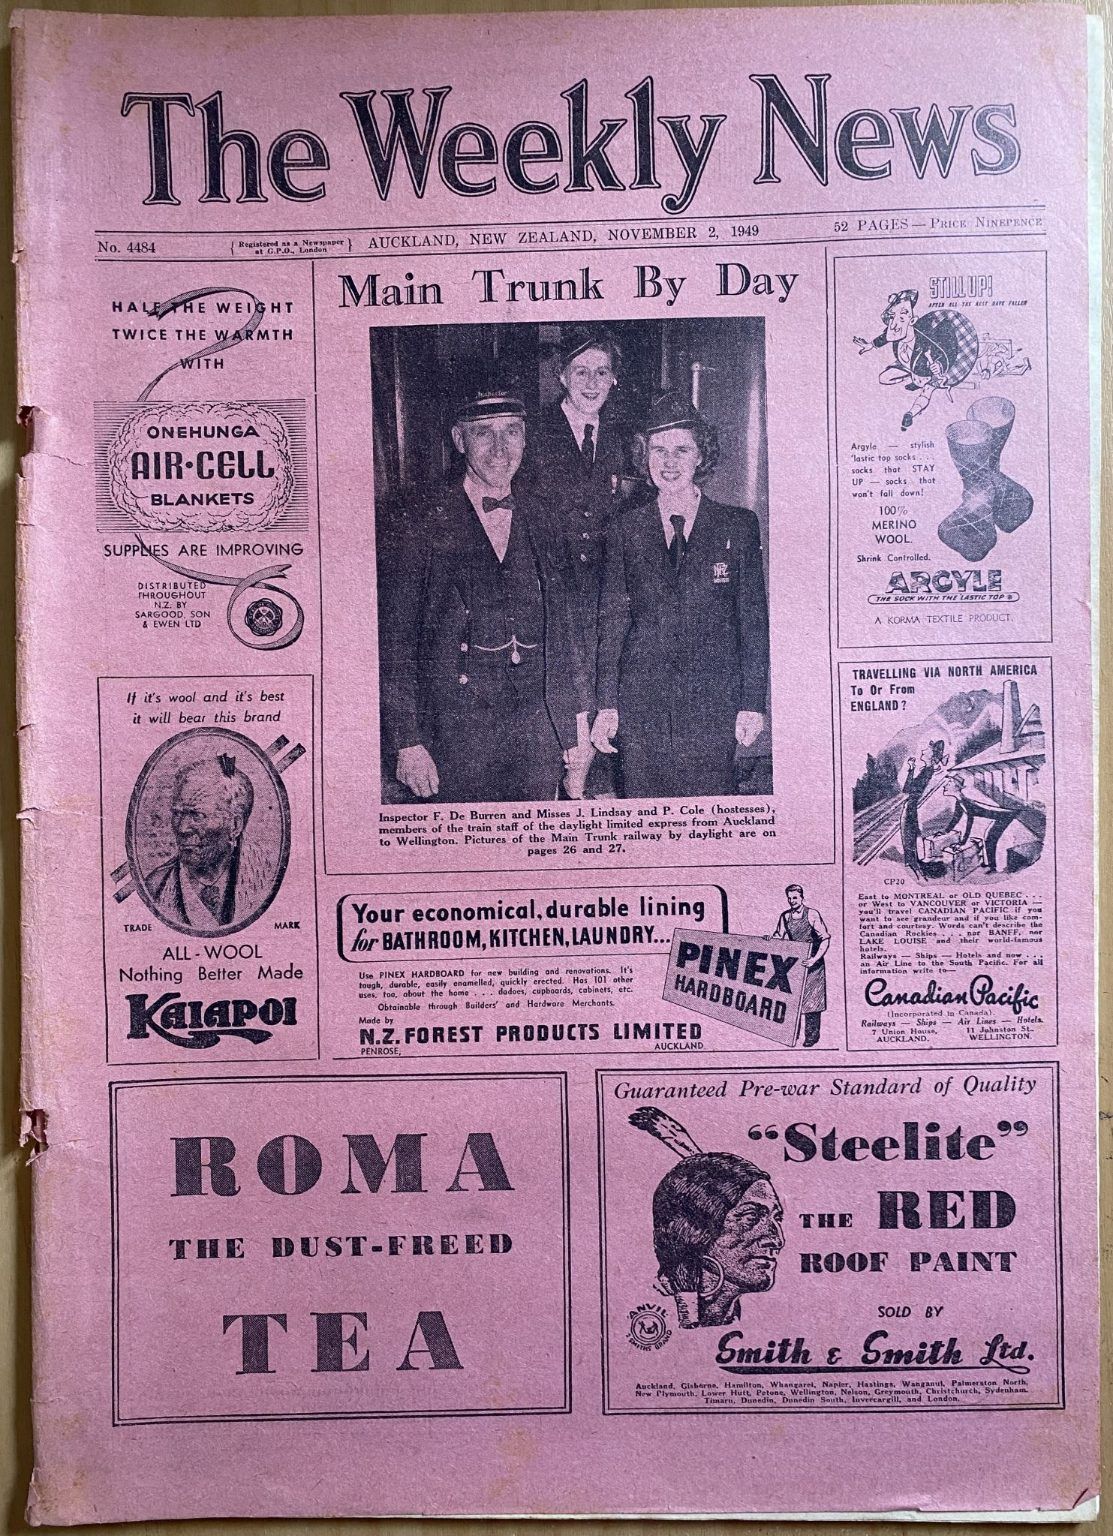 OLD NEWSPAPER: The Weekly News, No. 4484, 2 November 1949